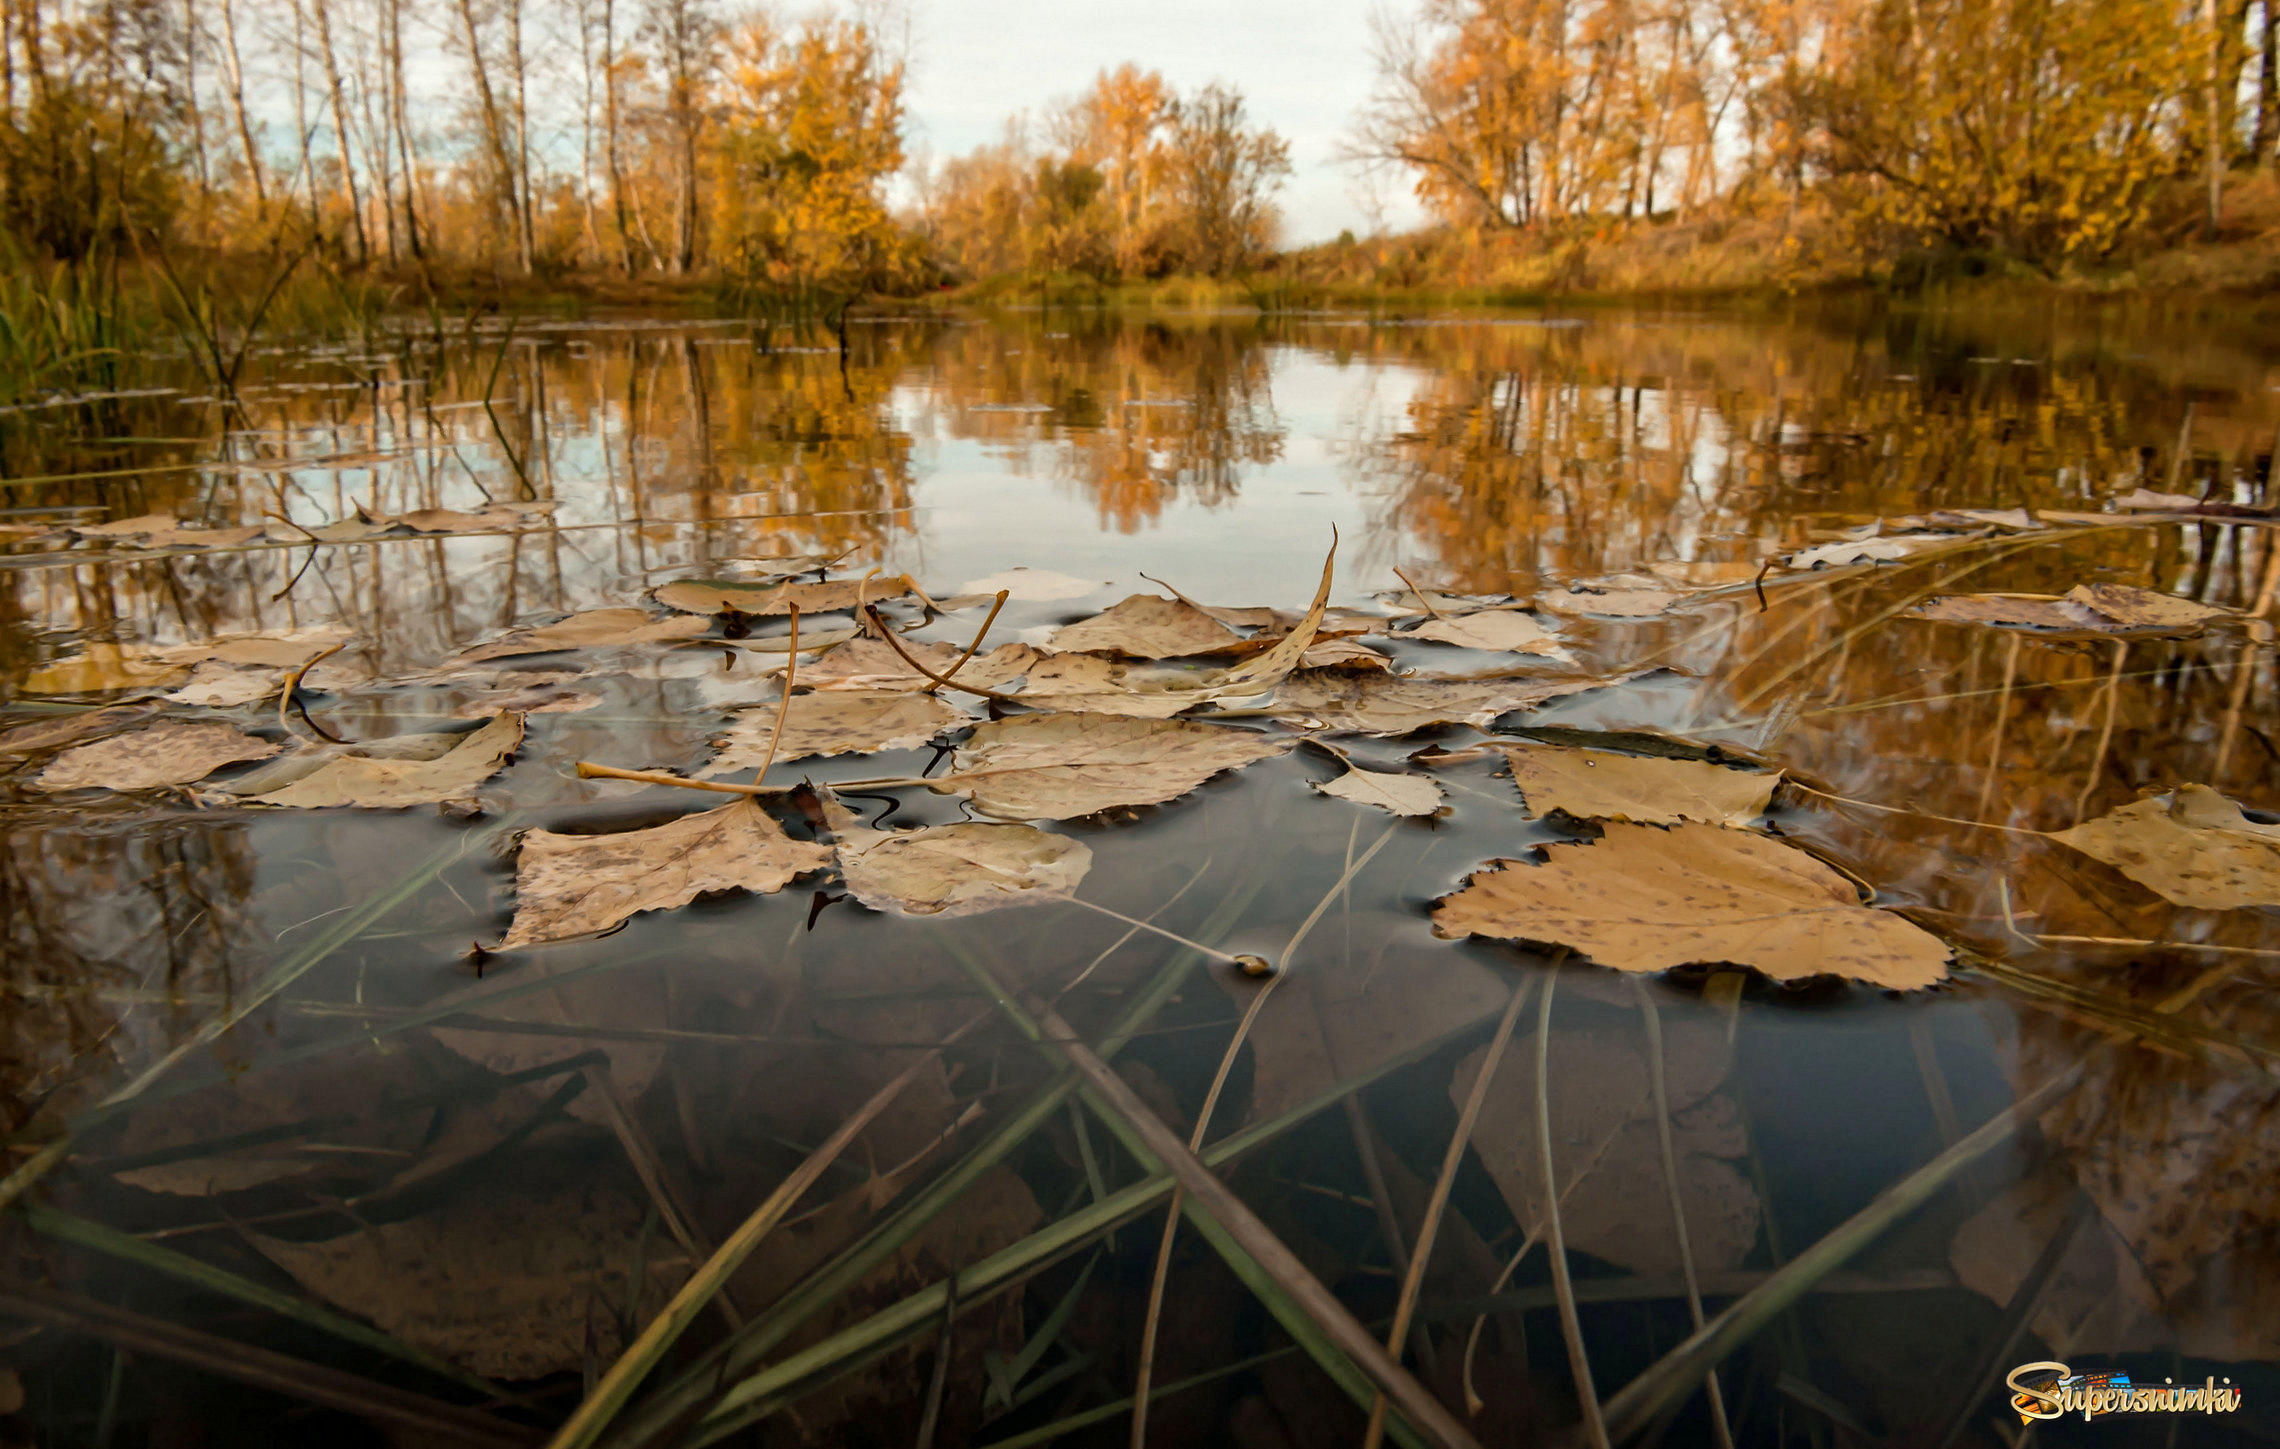 Листья осени на воде...